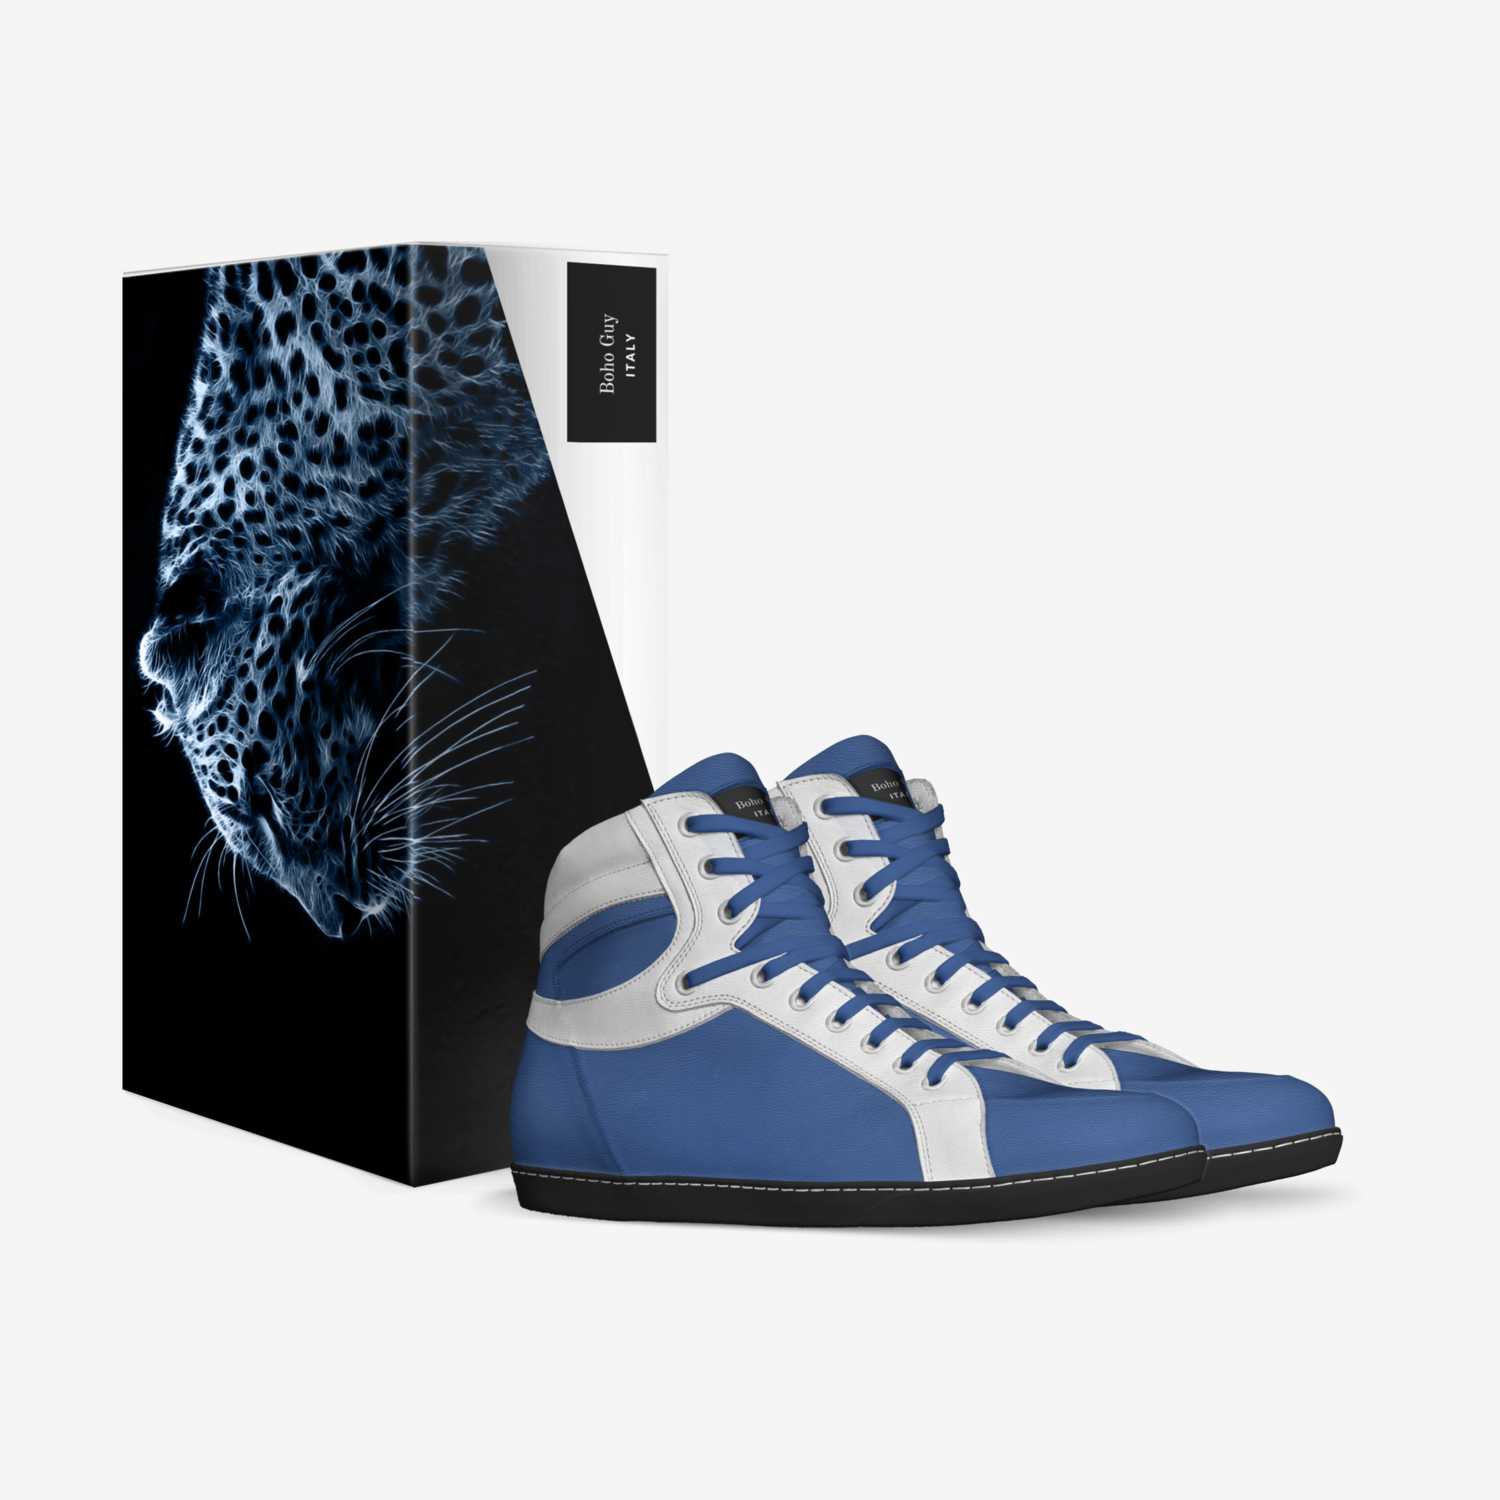 Boho Guy custom made in Italy shoes by Marijke Verkerk Design | Box view